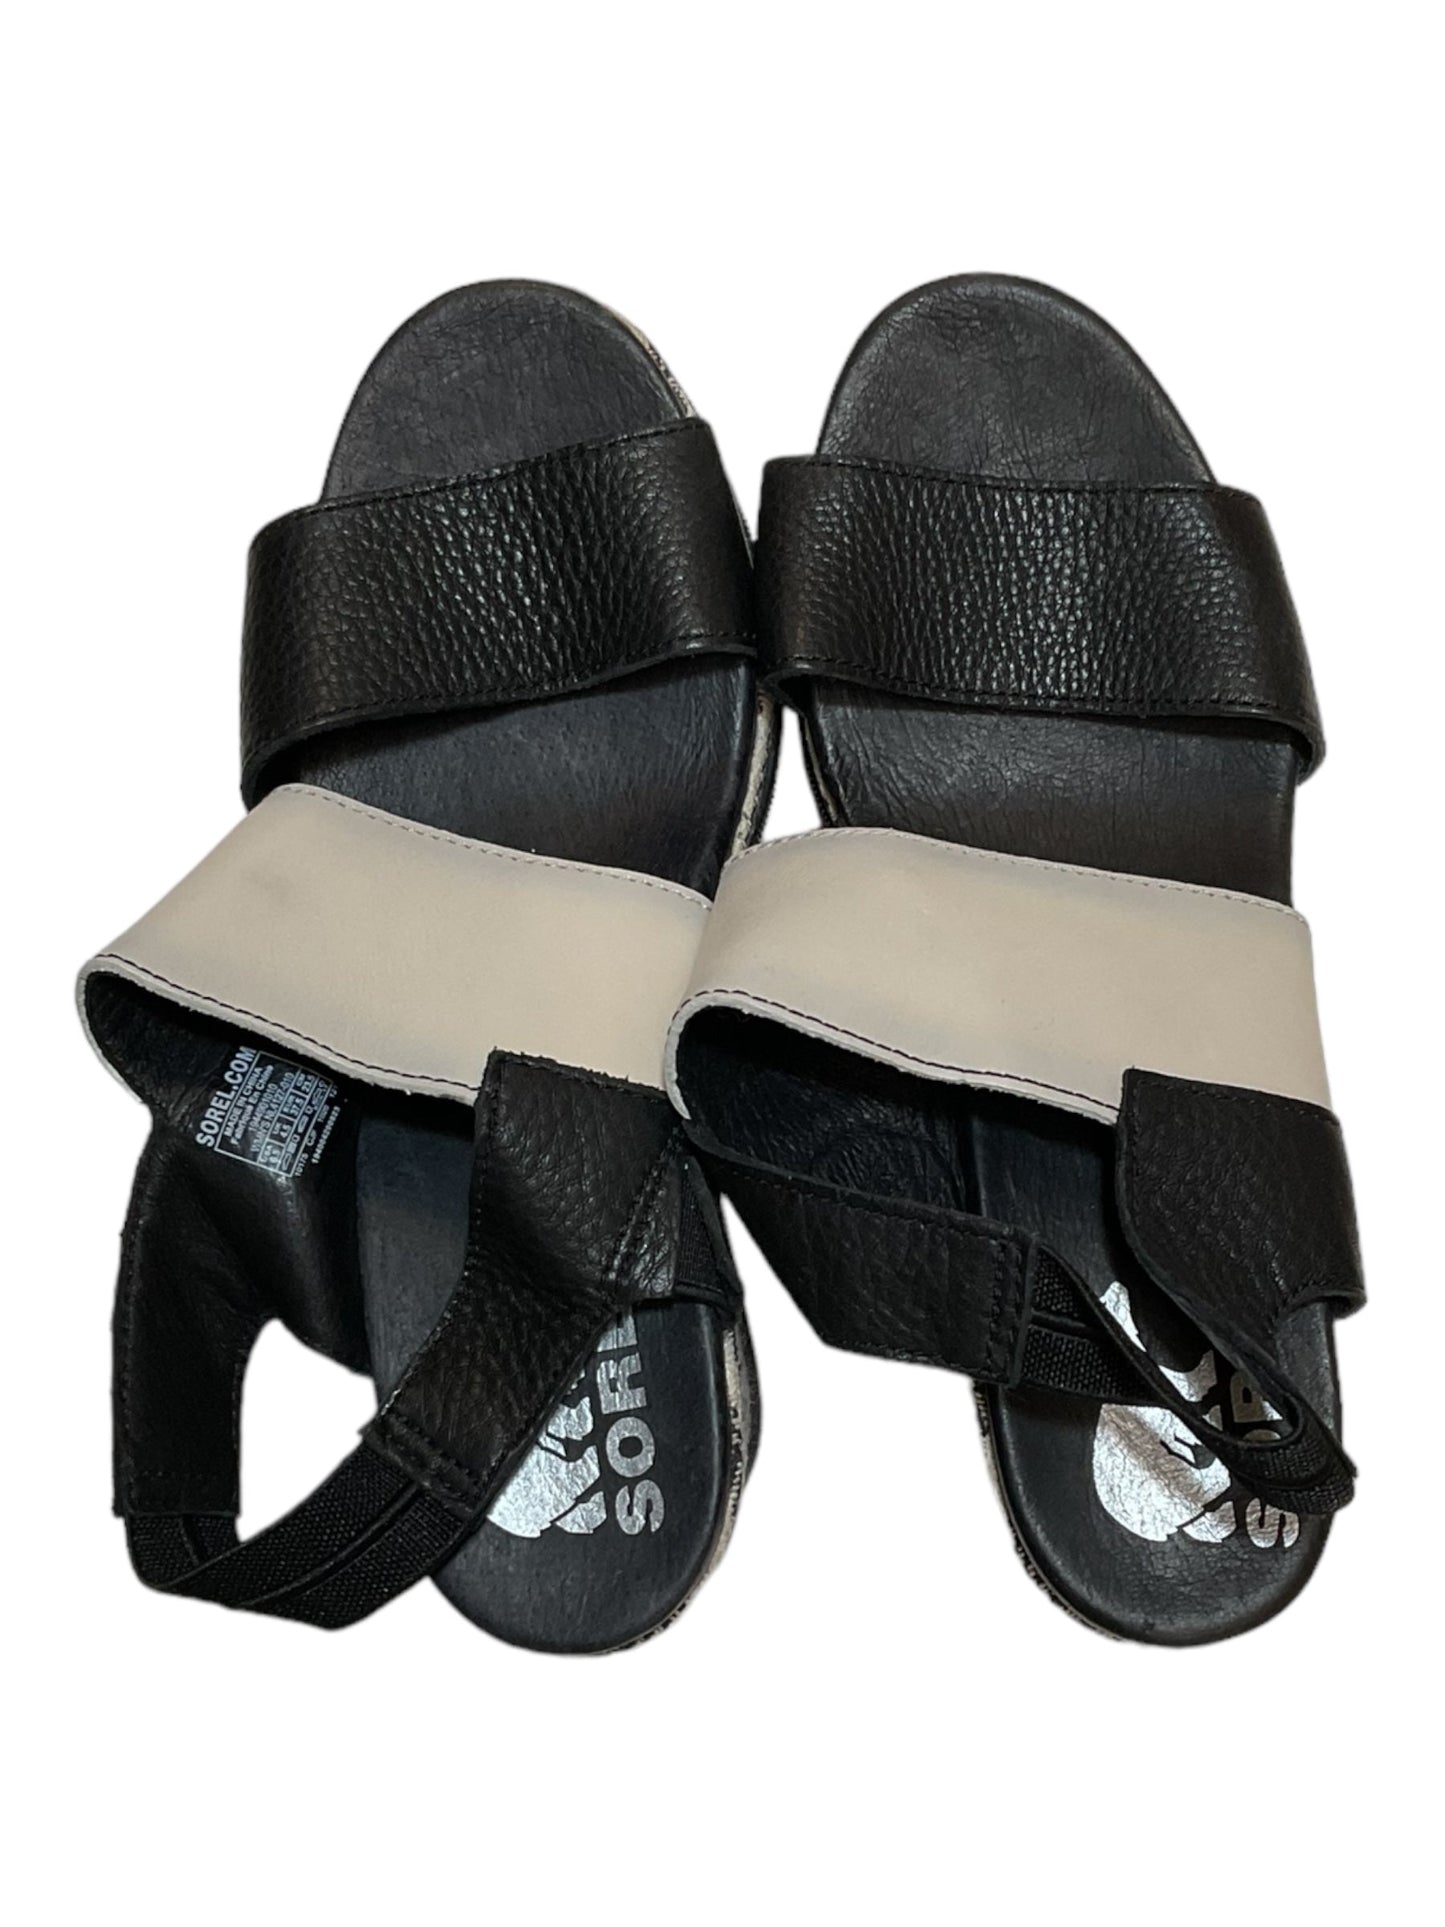 Black & White Sandals Heels Wedge Sorel, Size 6.5